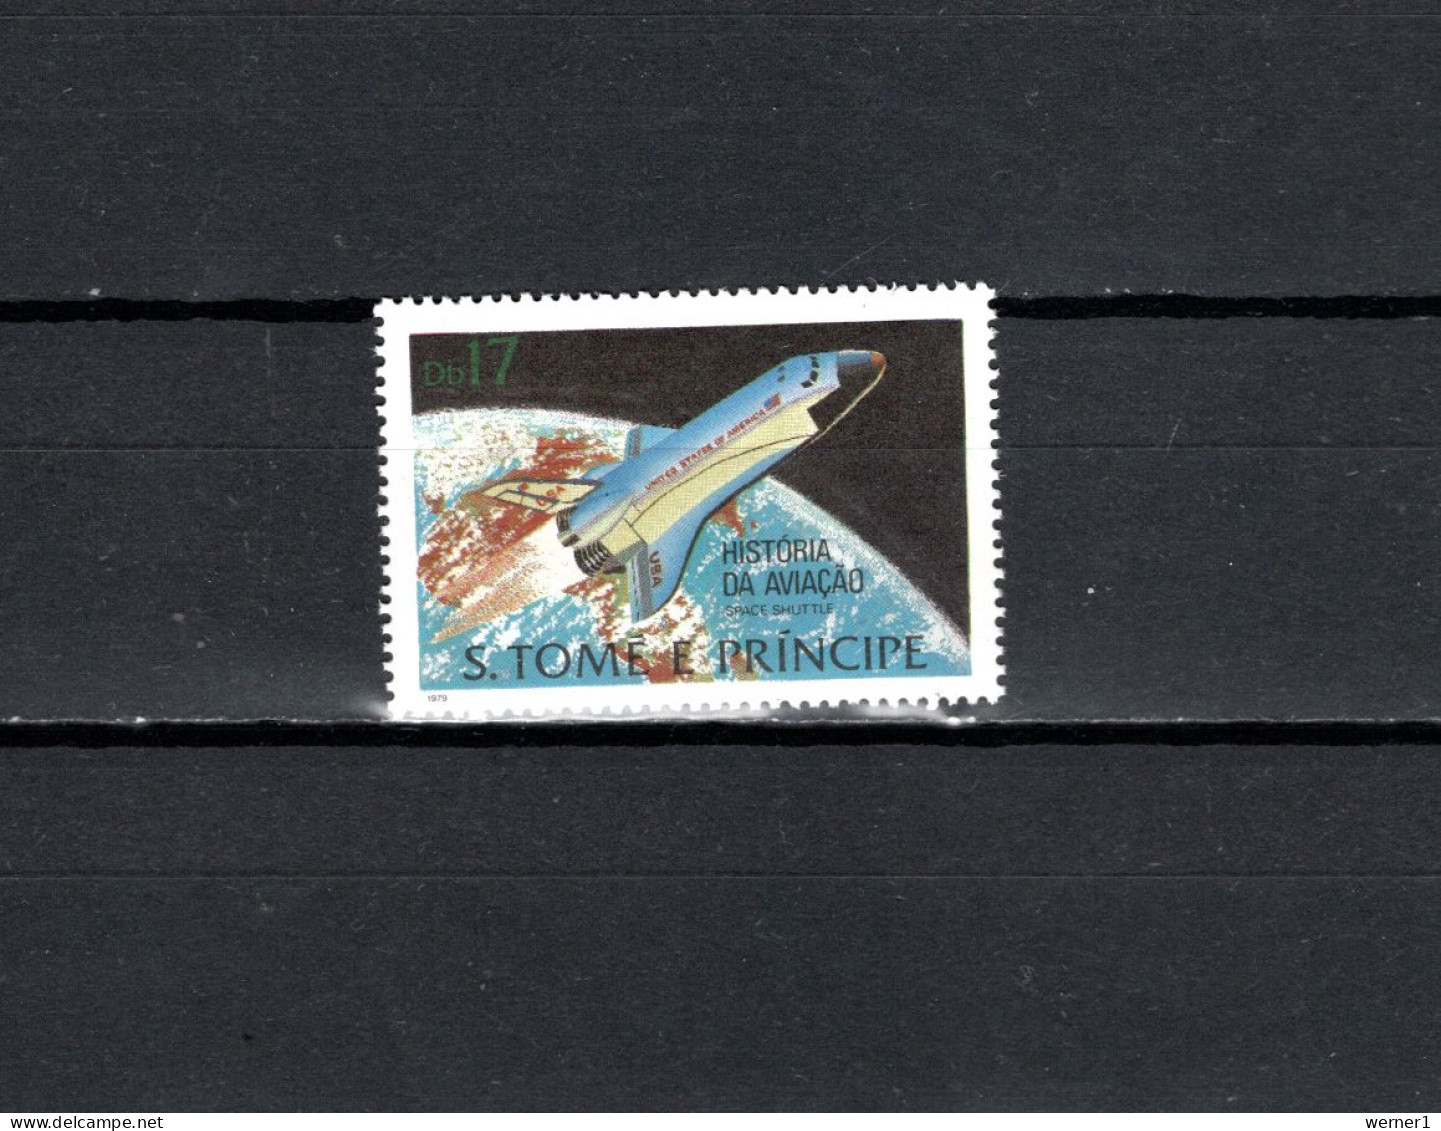 Sao Tome E Principe (St. Thomas & Prince) 1979 Space Shuttle 17Db Stamp MNH - Afrika